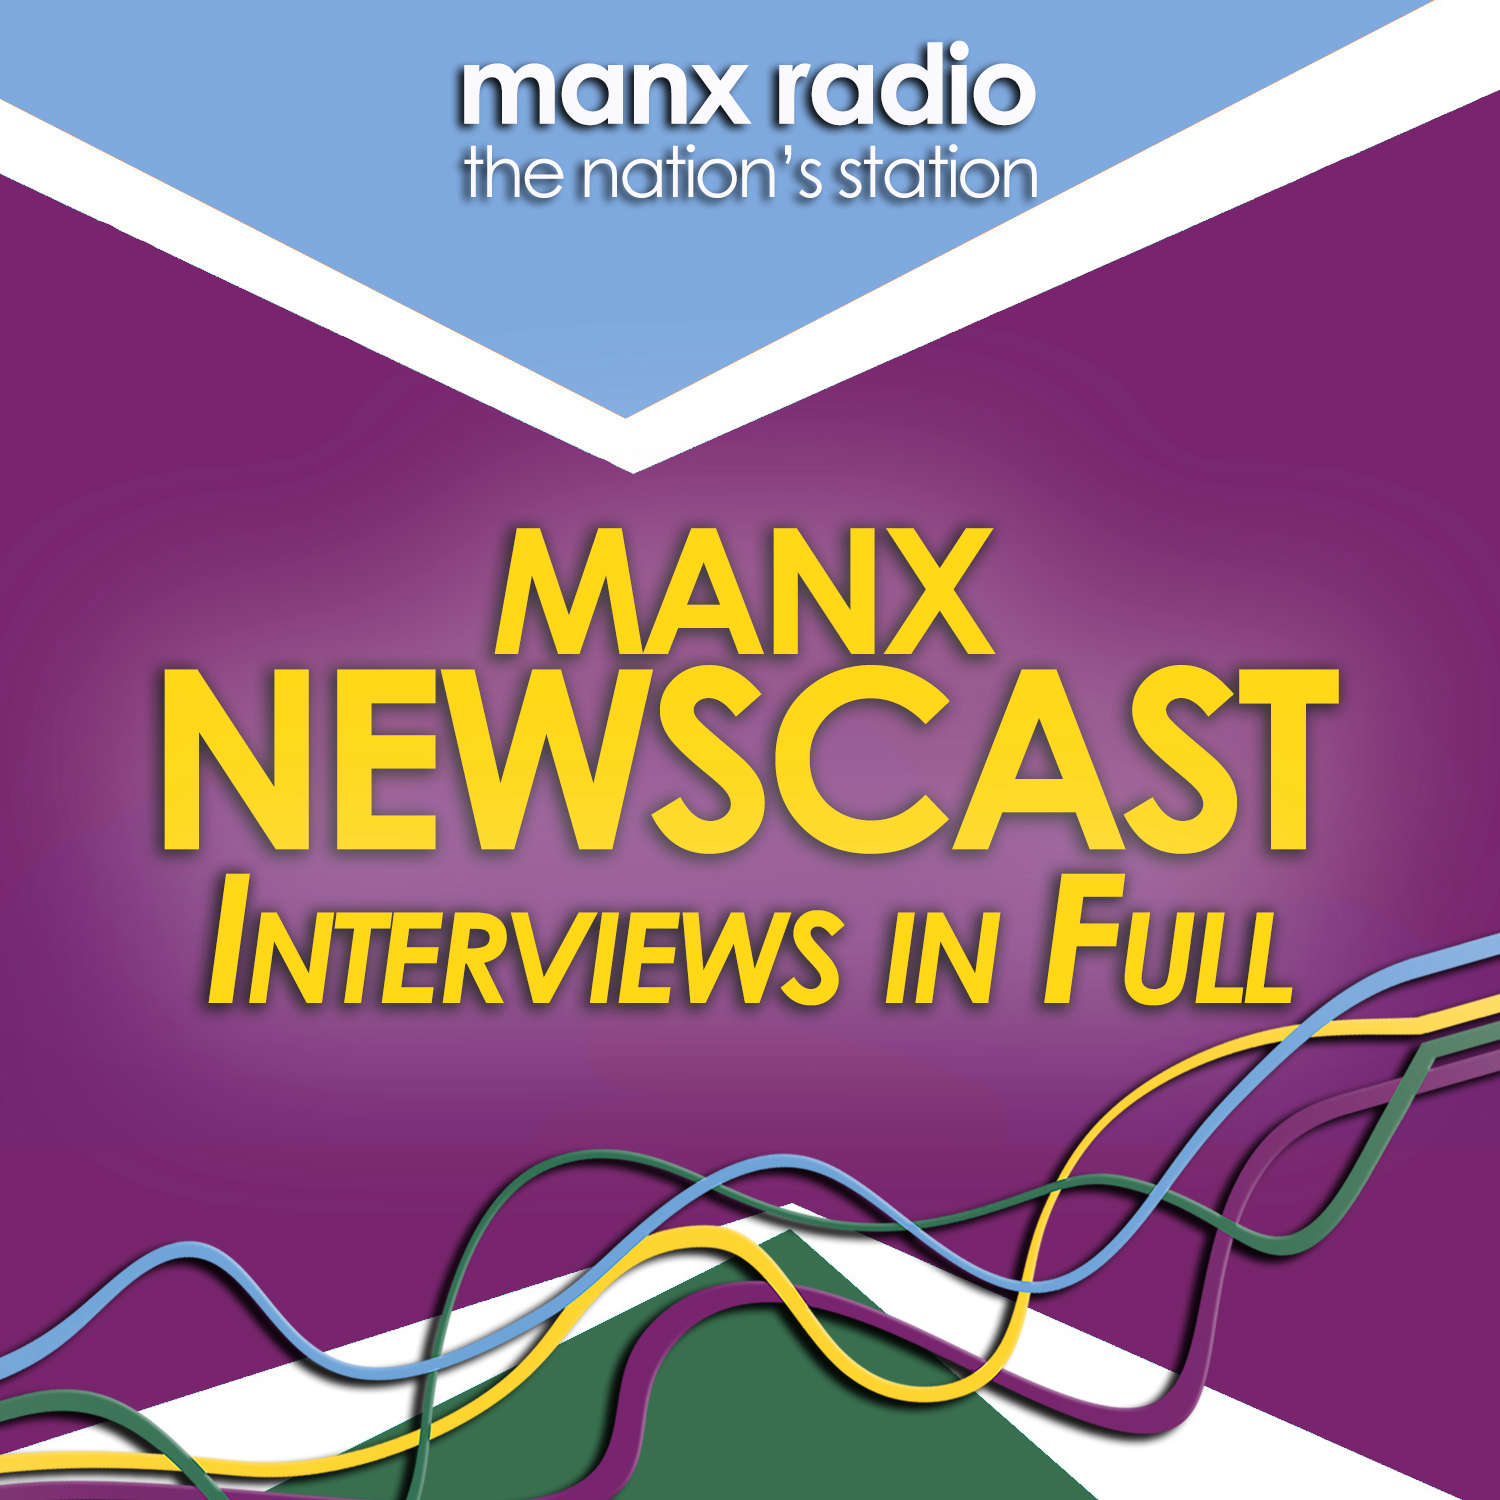 Manx Newscast - News Interviews in Full